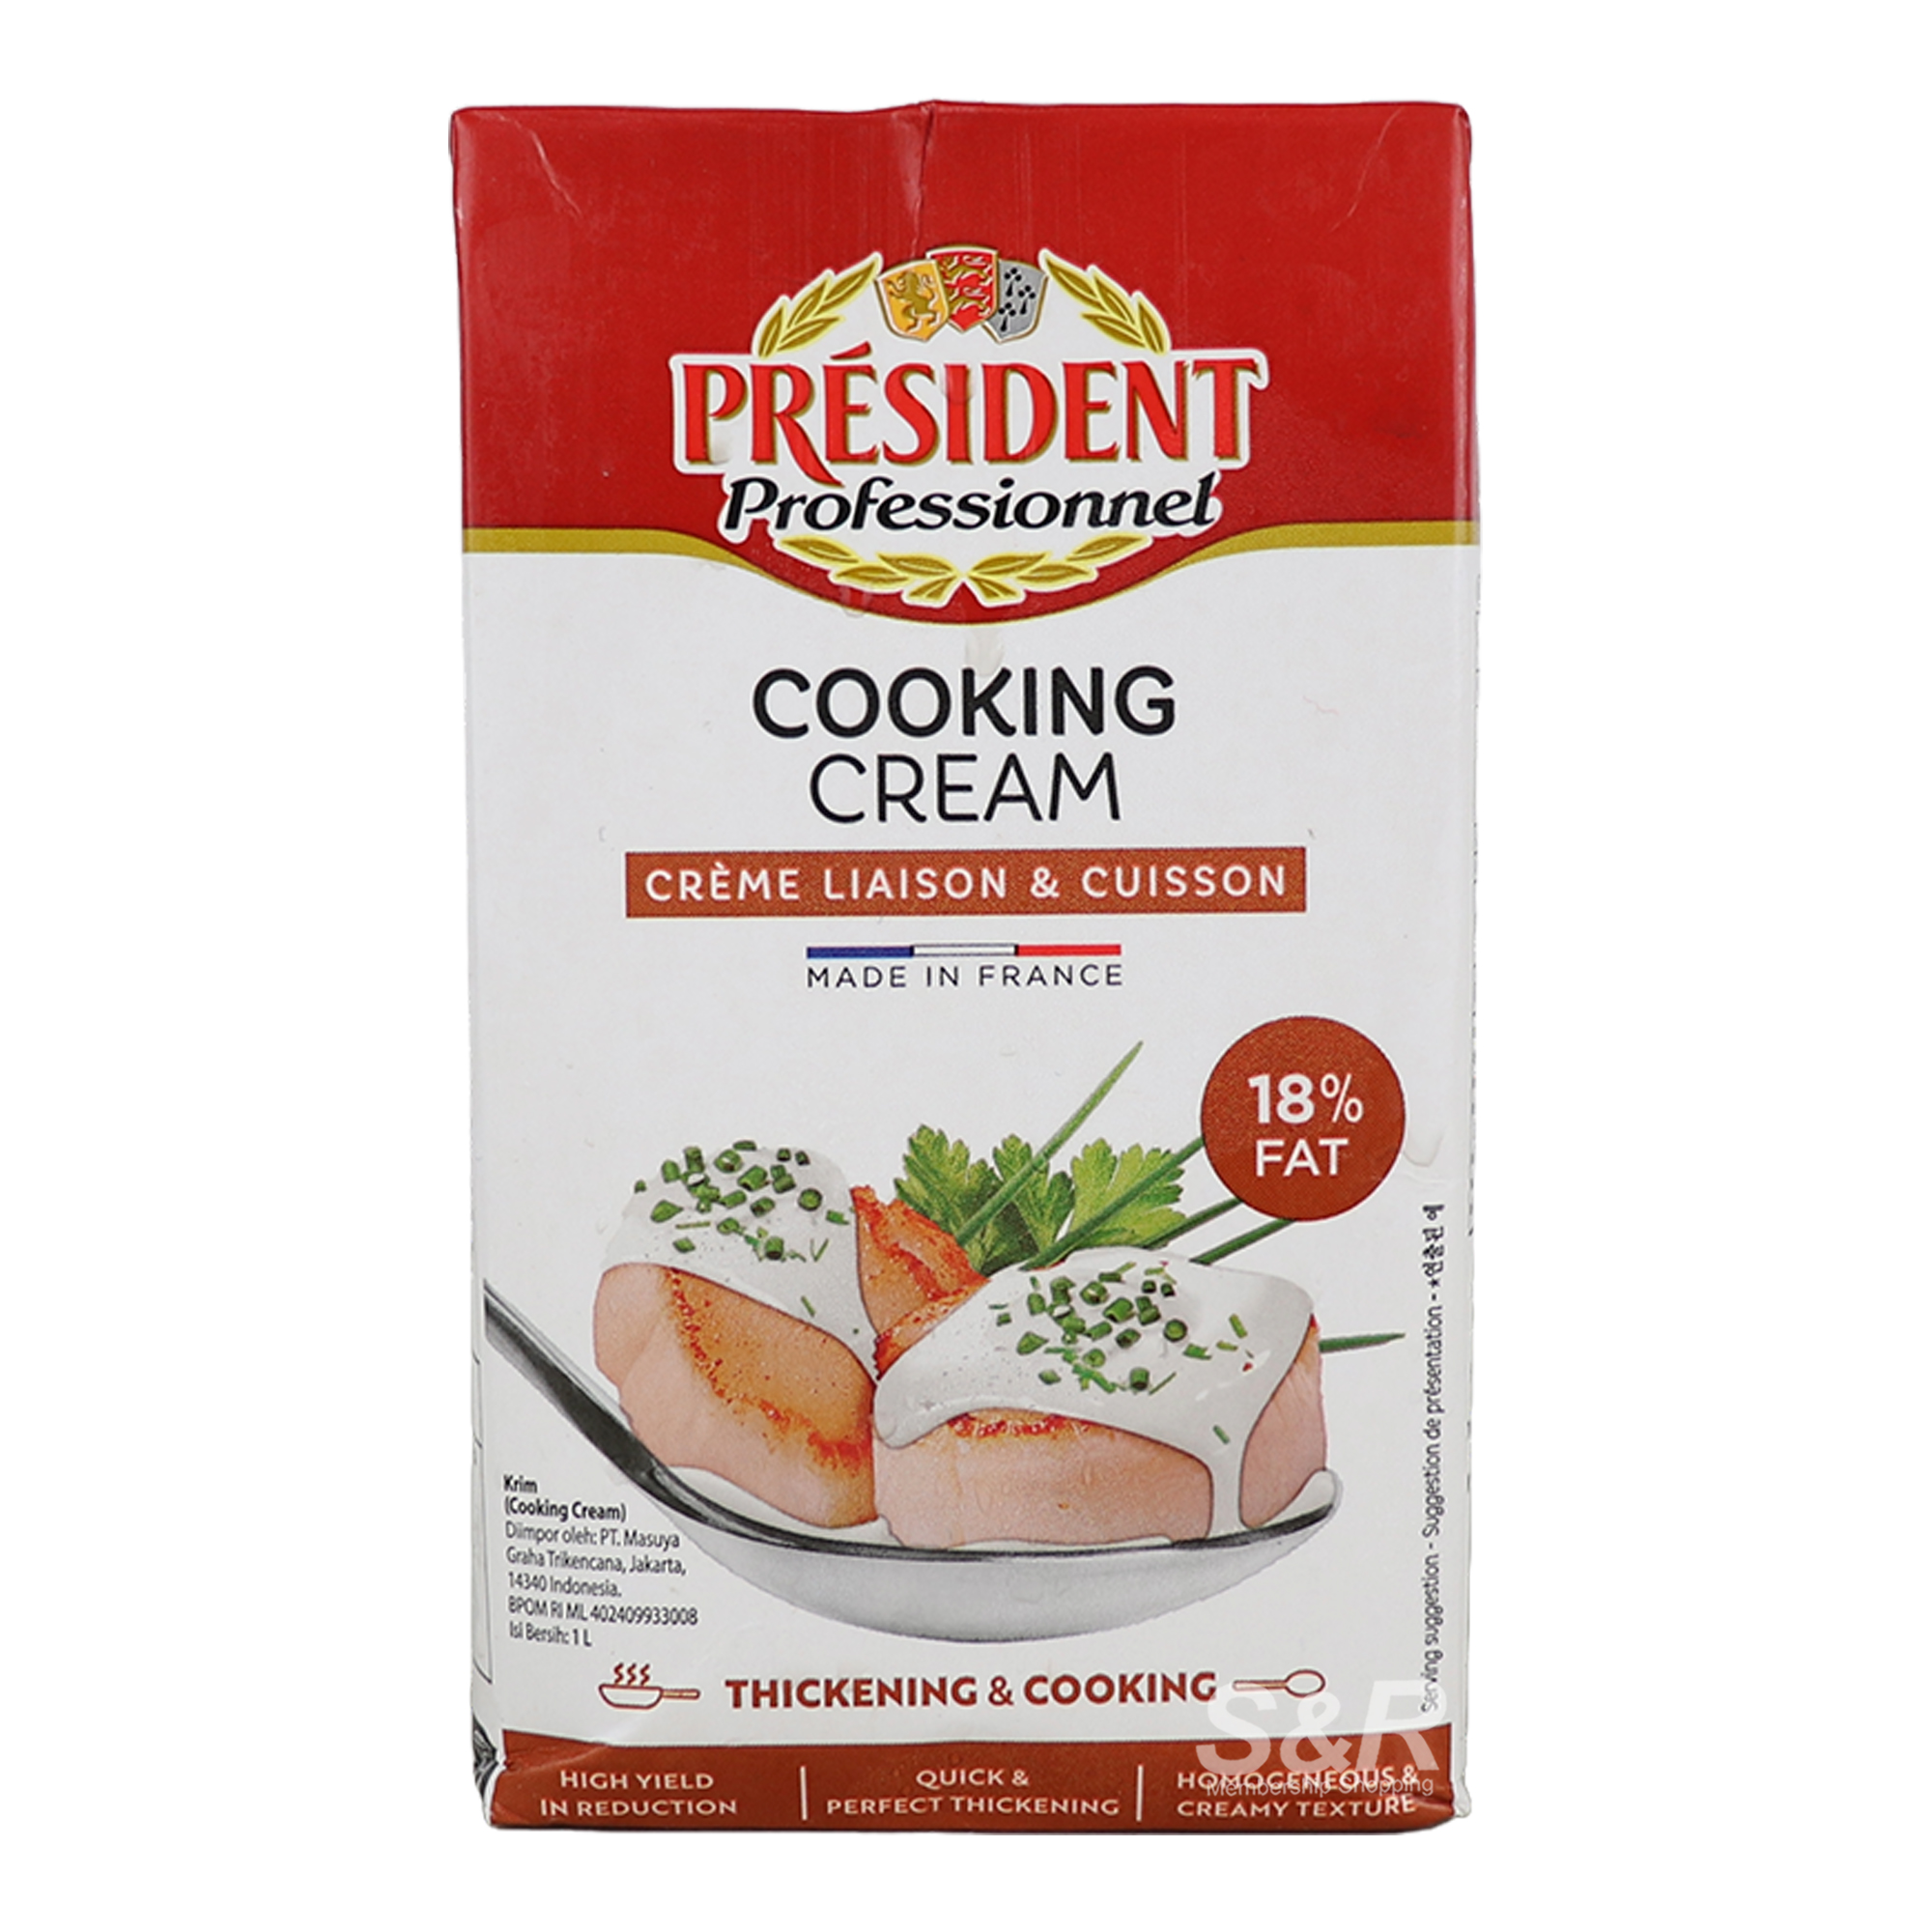 President Cooking Cream 1L